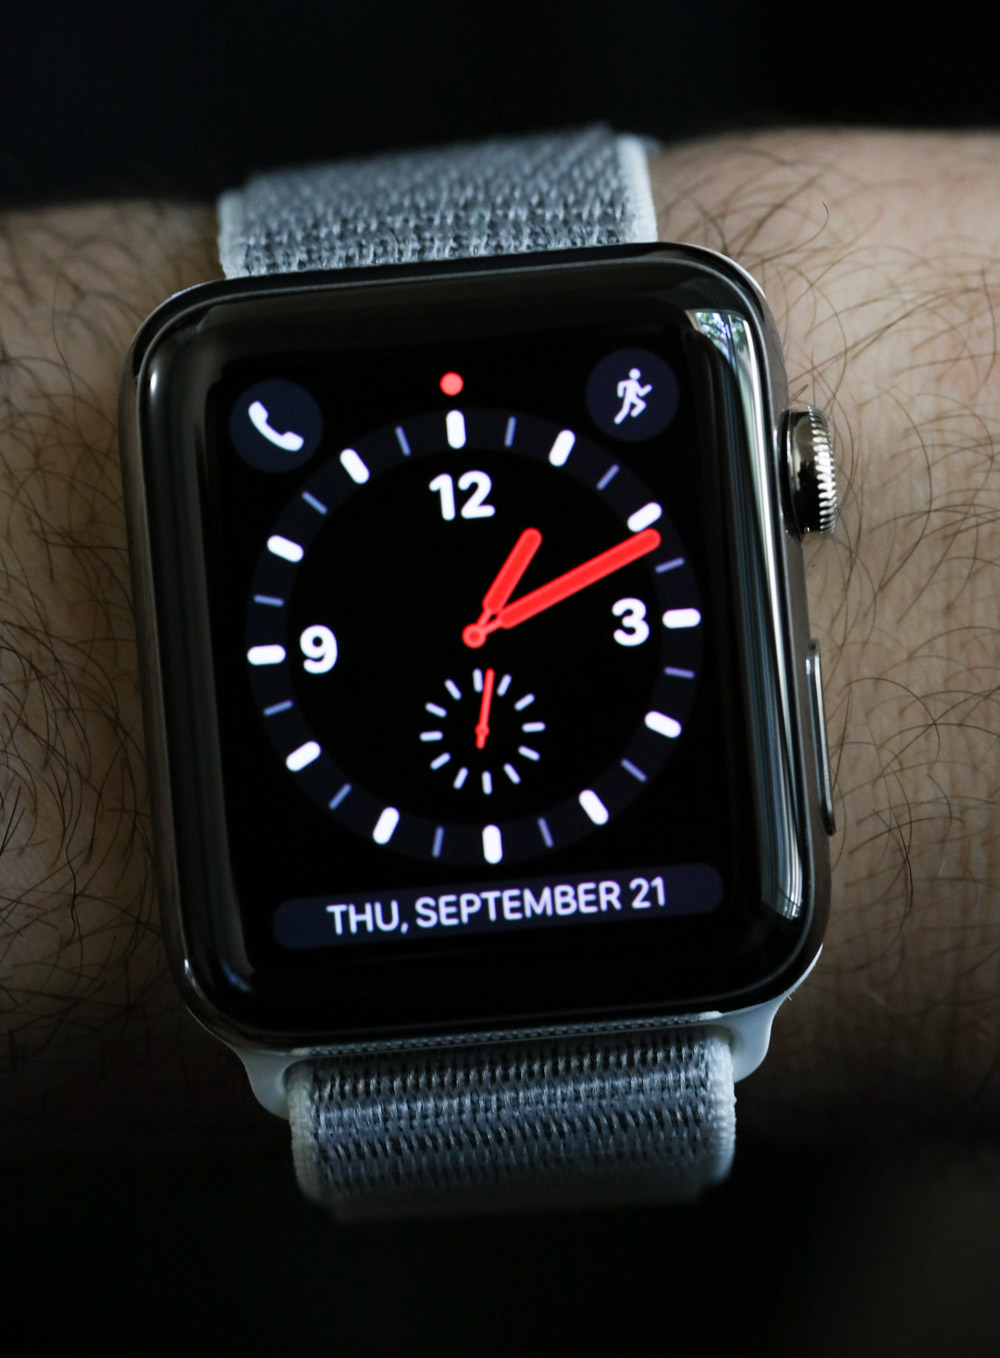 World 3 watch. Apple watch 3. Циферблат IWATCH 7. Циферблат Эппл вотч 4. Циферблаты для Apple IWATCH 3.